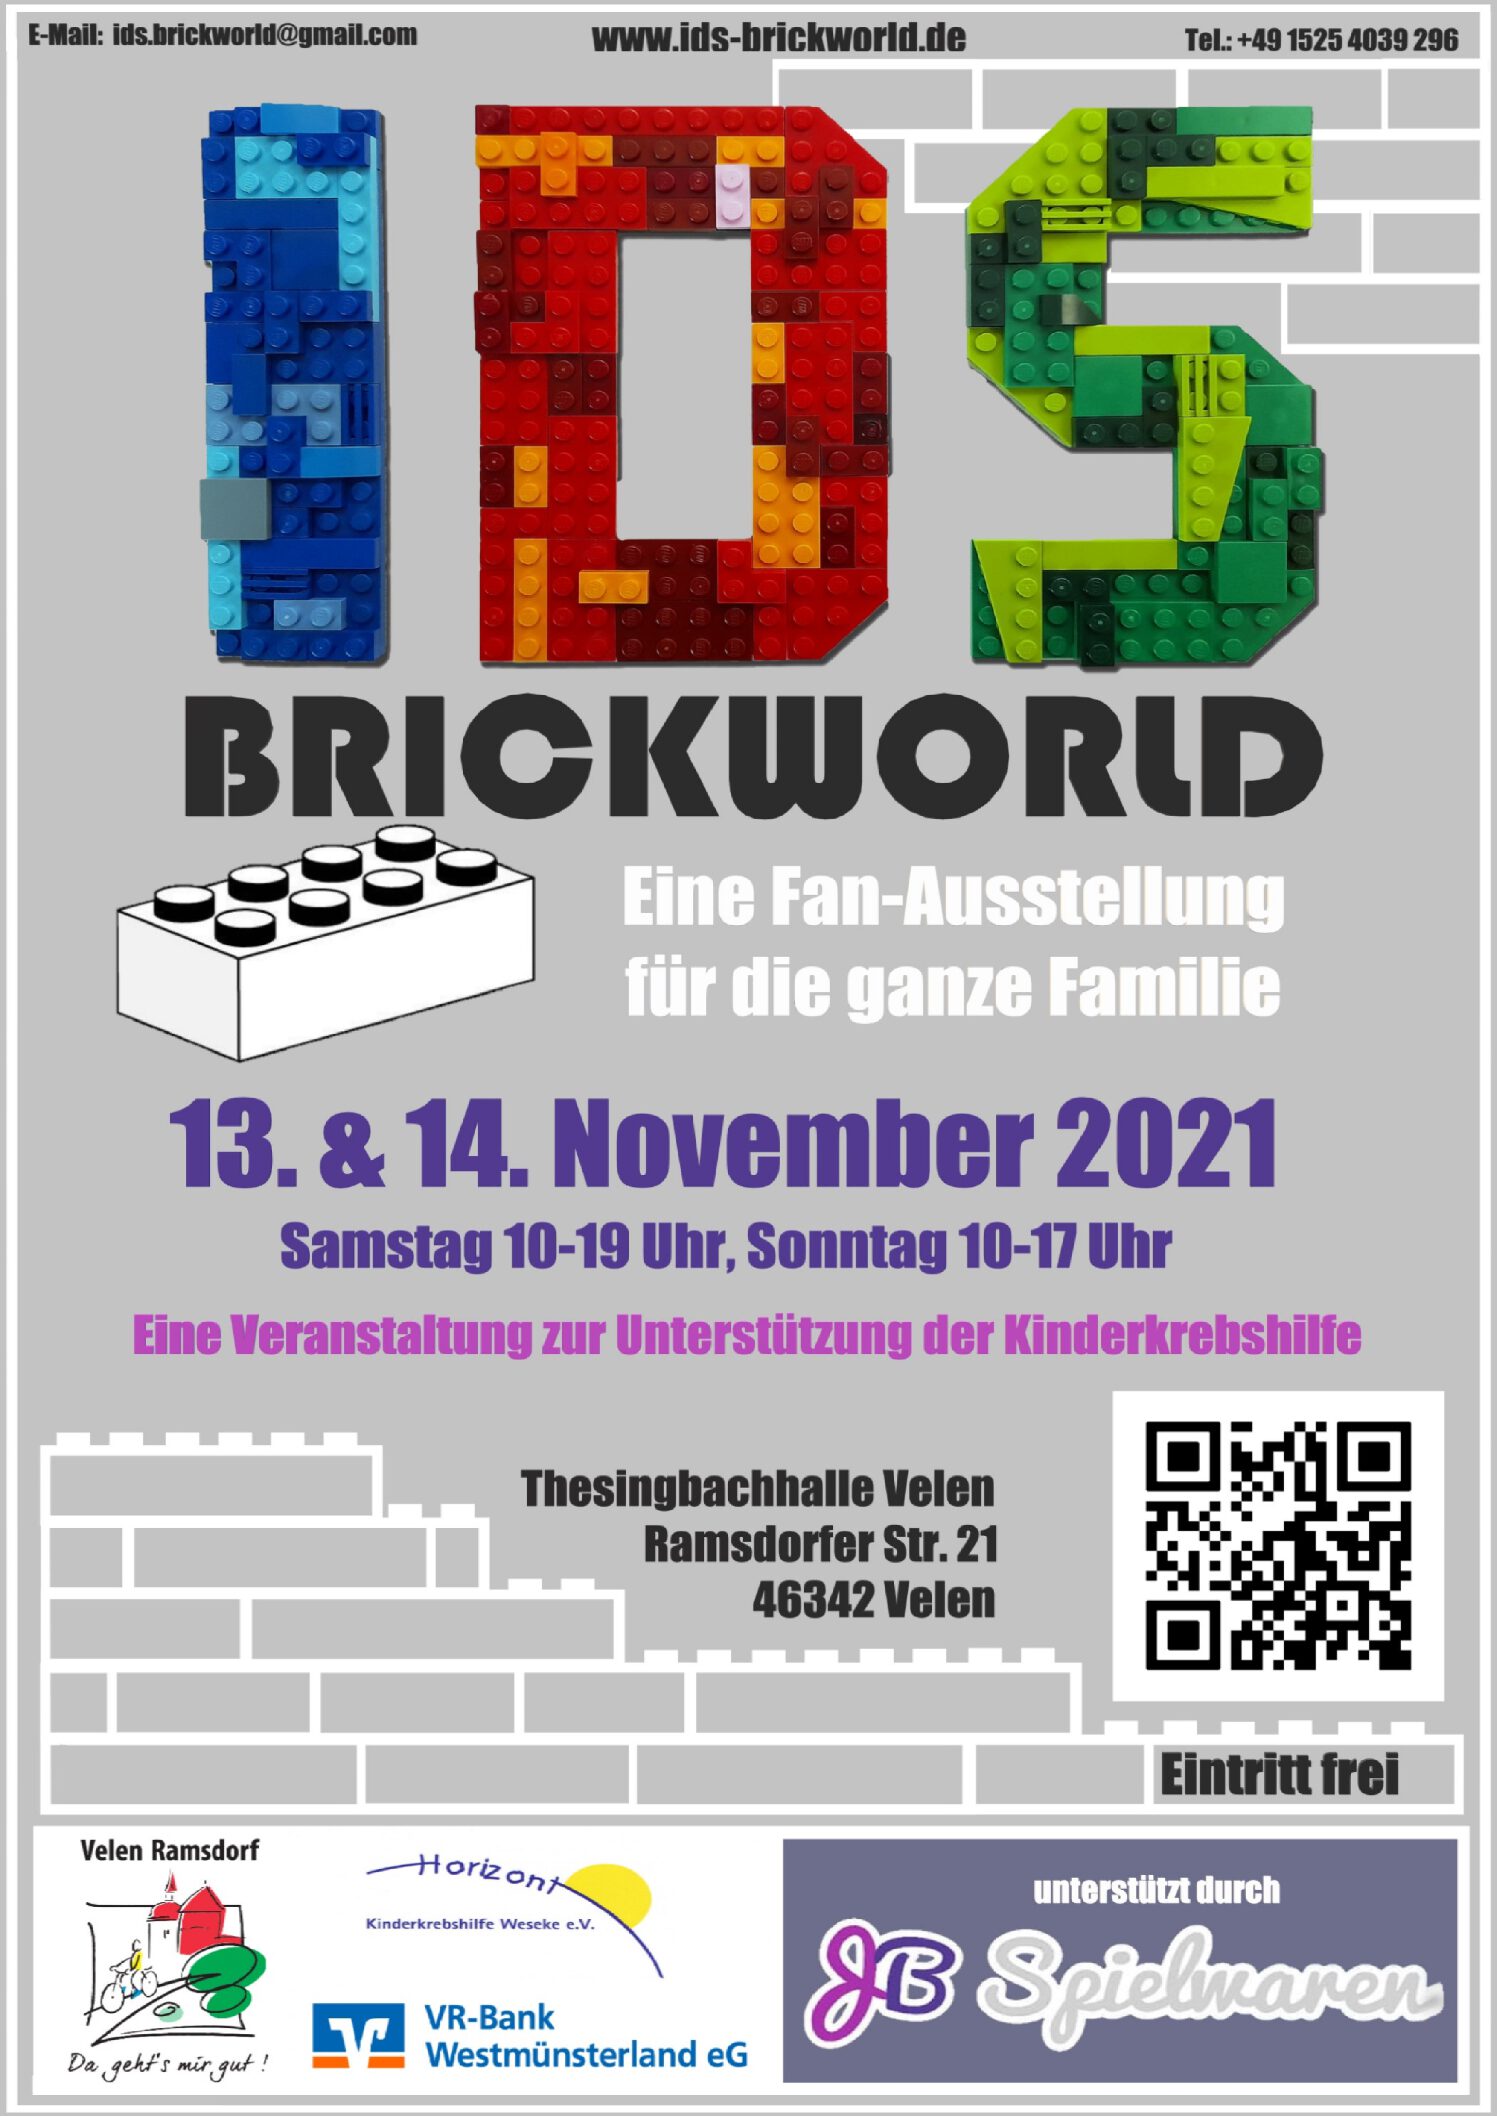 IDS Brickworld Fanausstellung